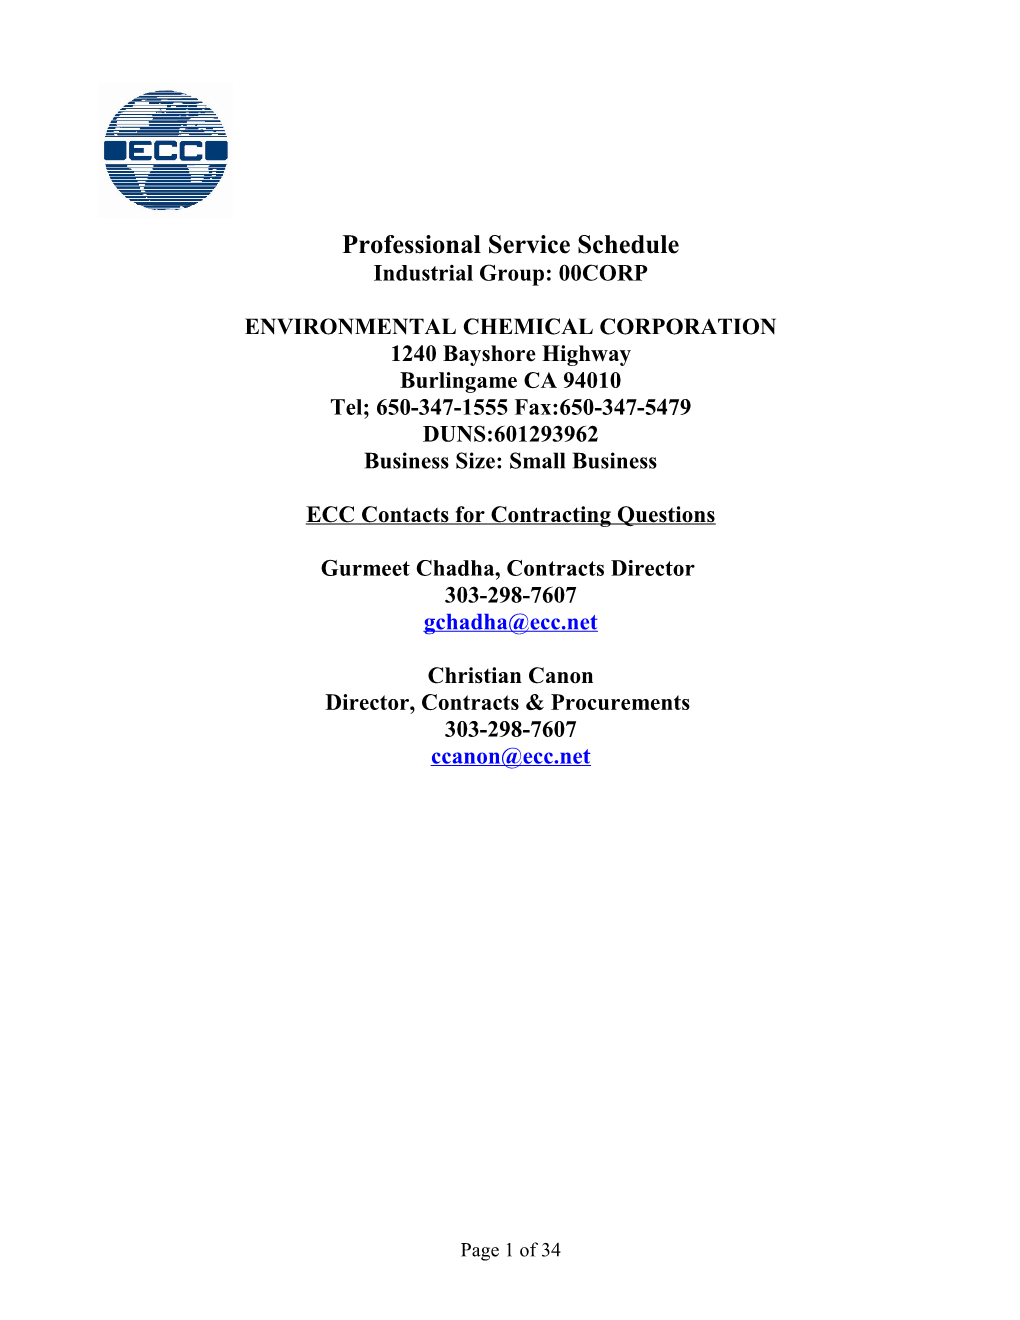 Environmental Chemical Corporation